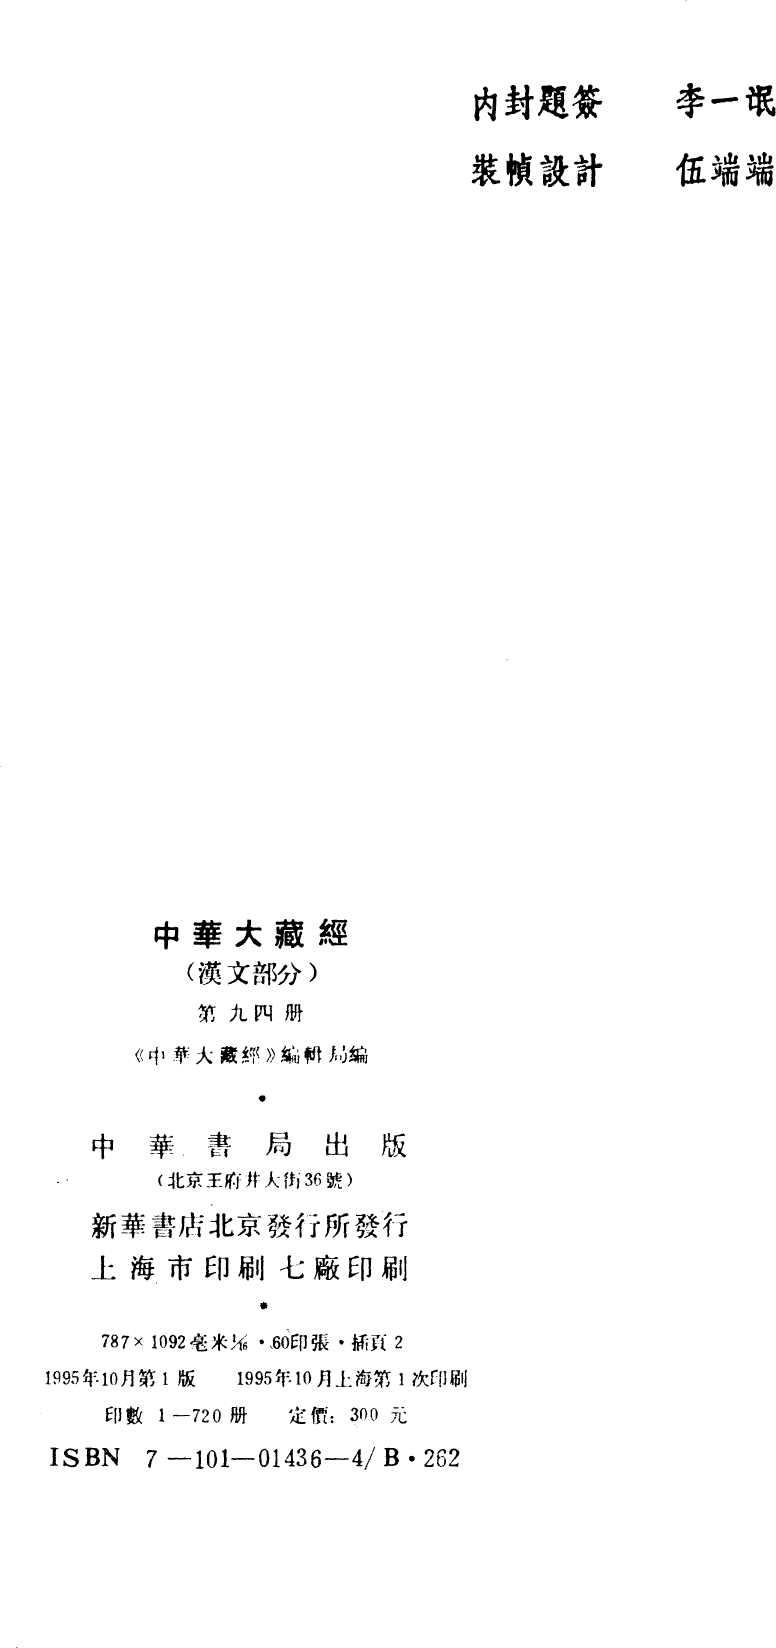 File:《中華大藏經》 第94冊 版權頁.png